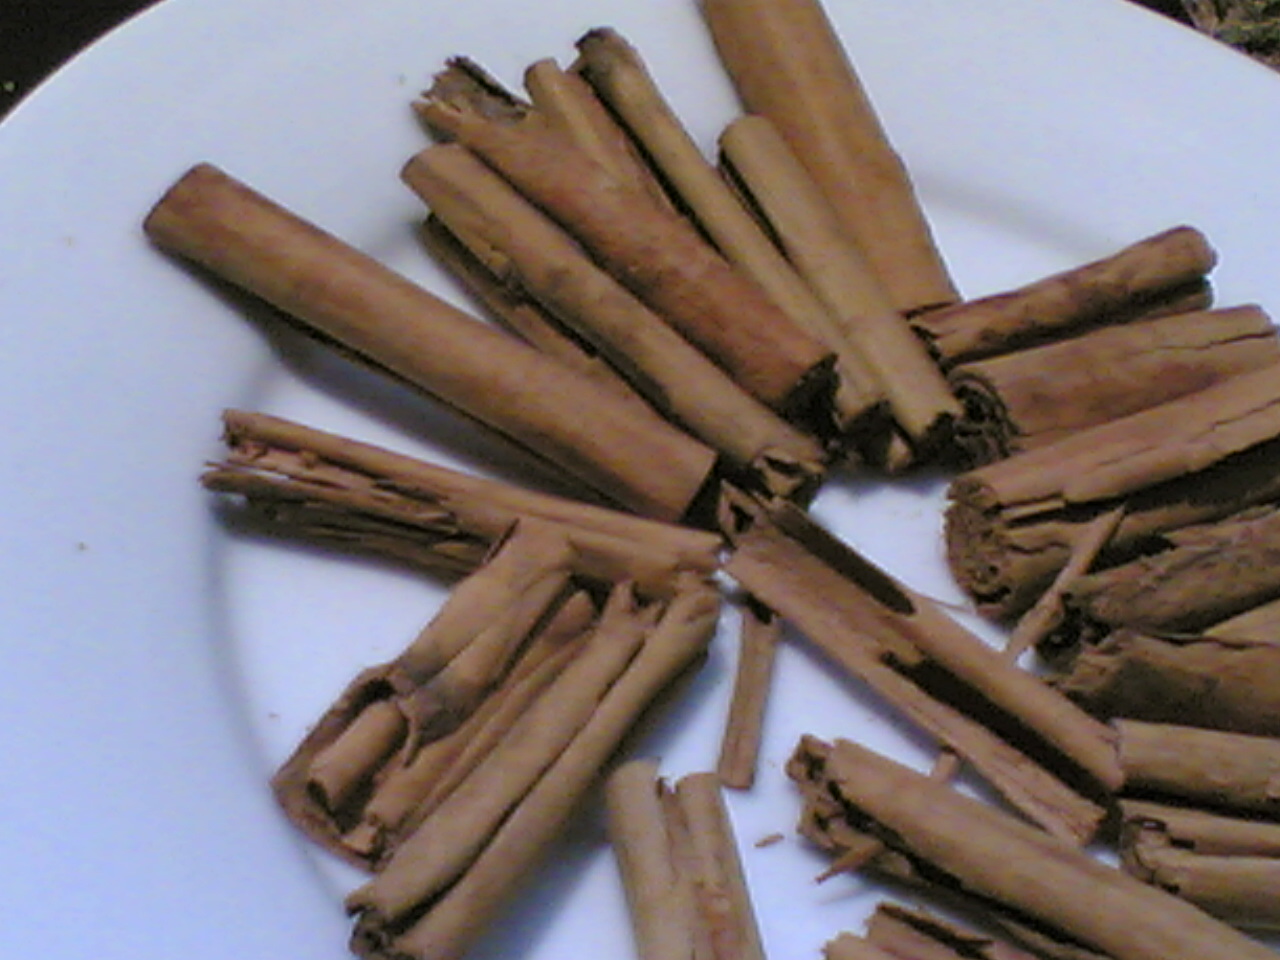 Cinnamon from Sri Lanka